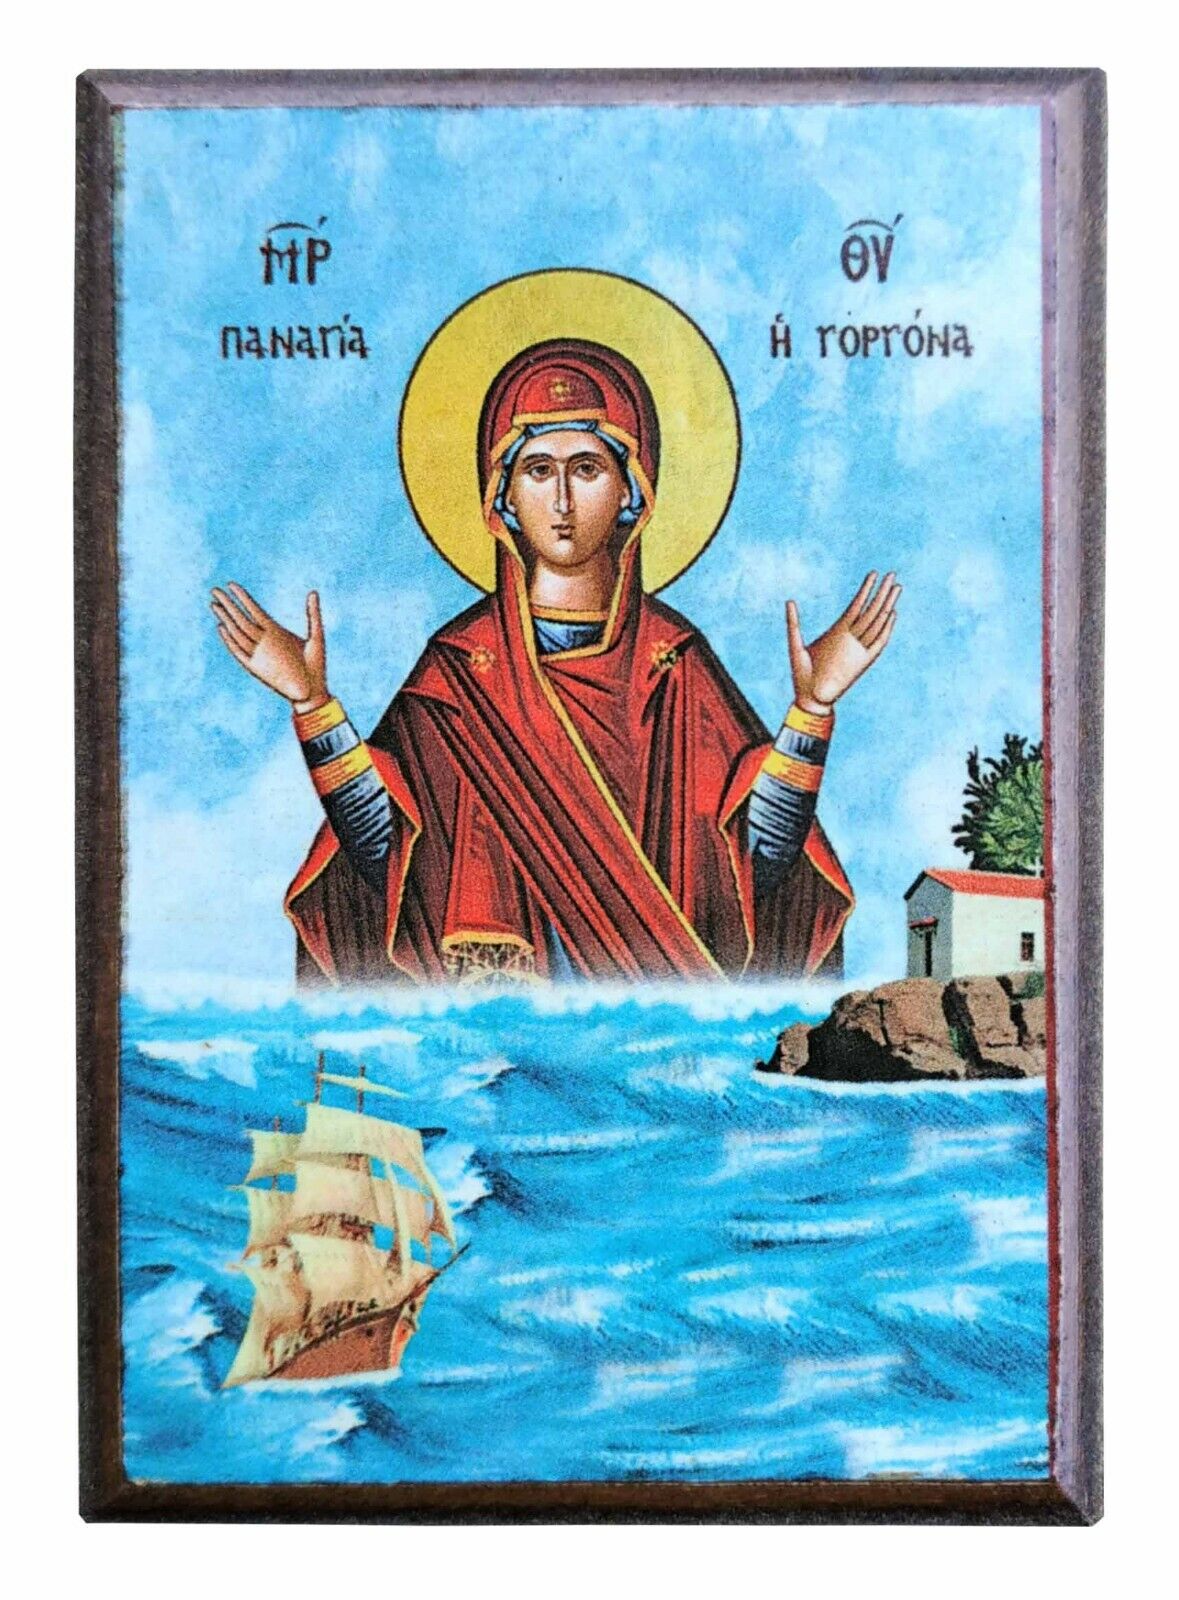 VIRGIN THE MERMAID, RISING FROM THE SEA WAVES-Greek Byzantine Orthodox Icon